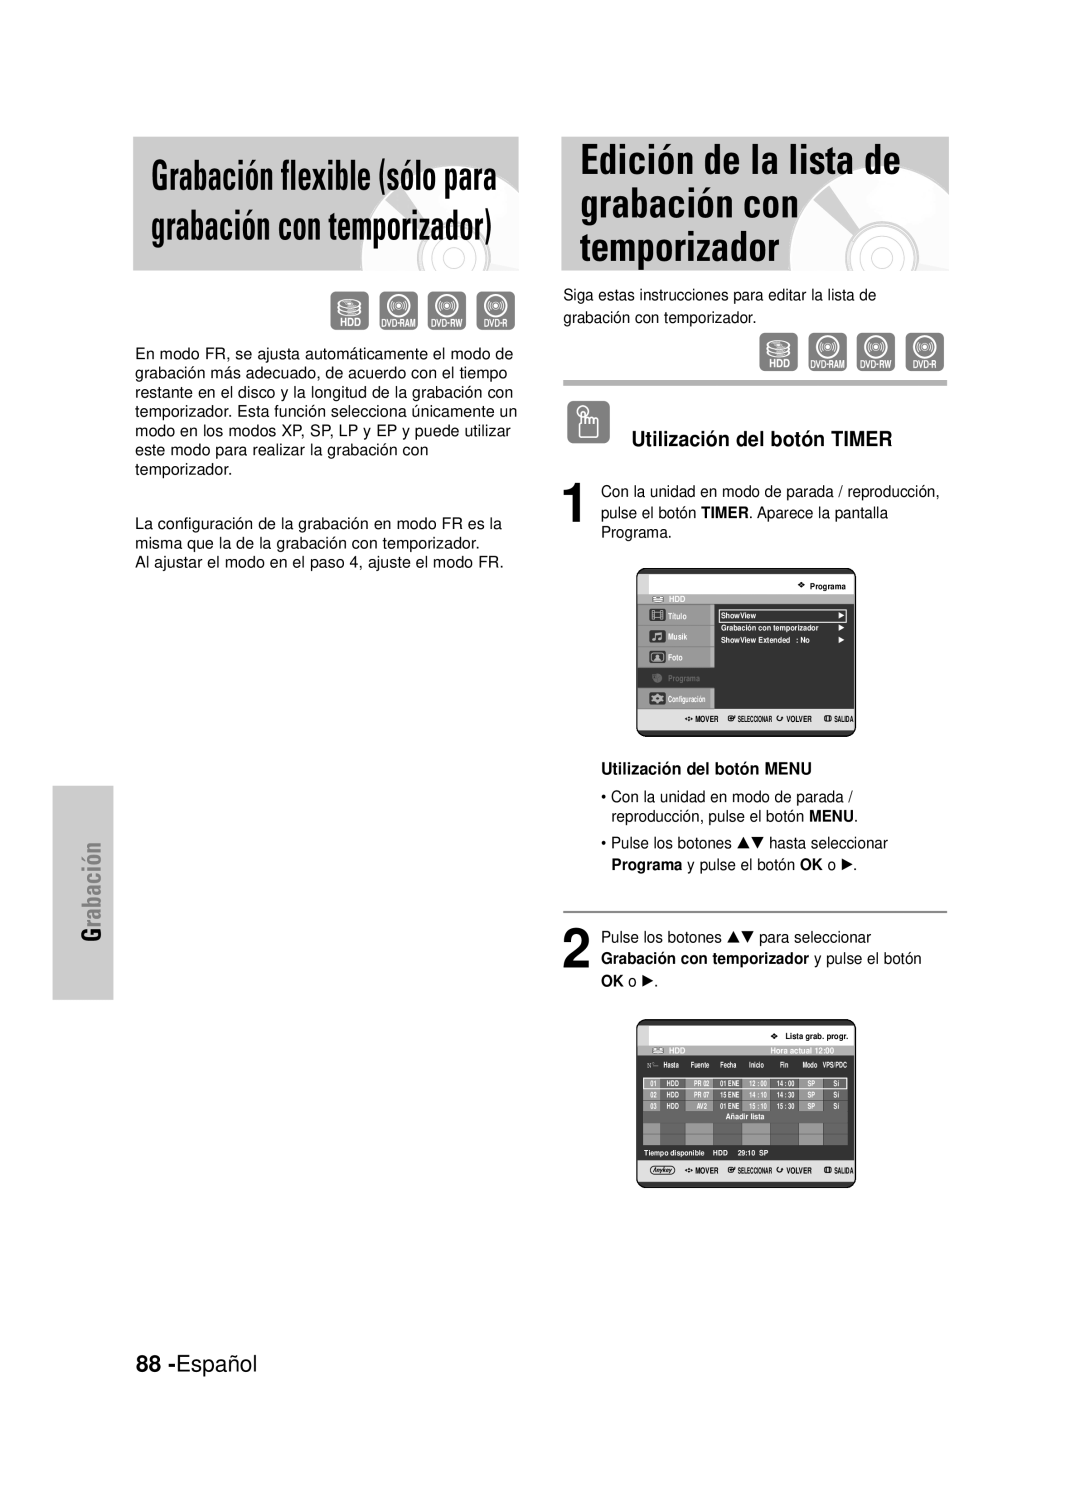 Samsung DVD-HR725/XEB Edición de la lista de grabación con temporizador, Español, Grabación, Utilización del botón TIMER 